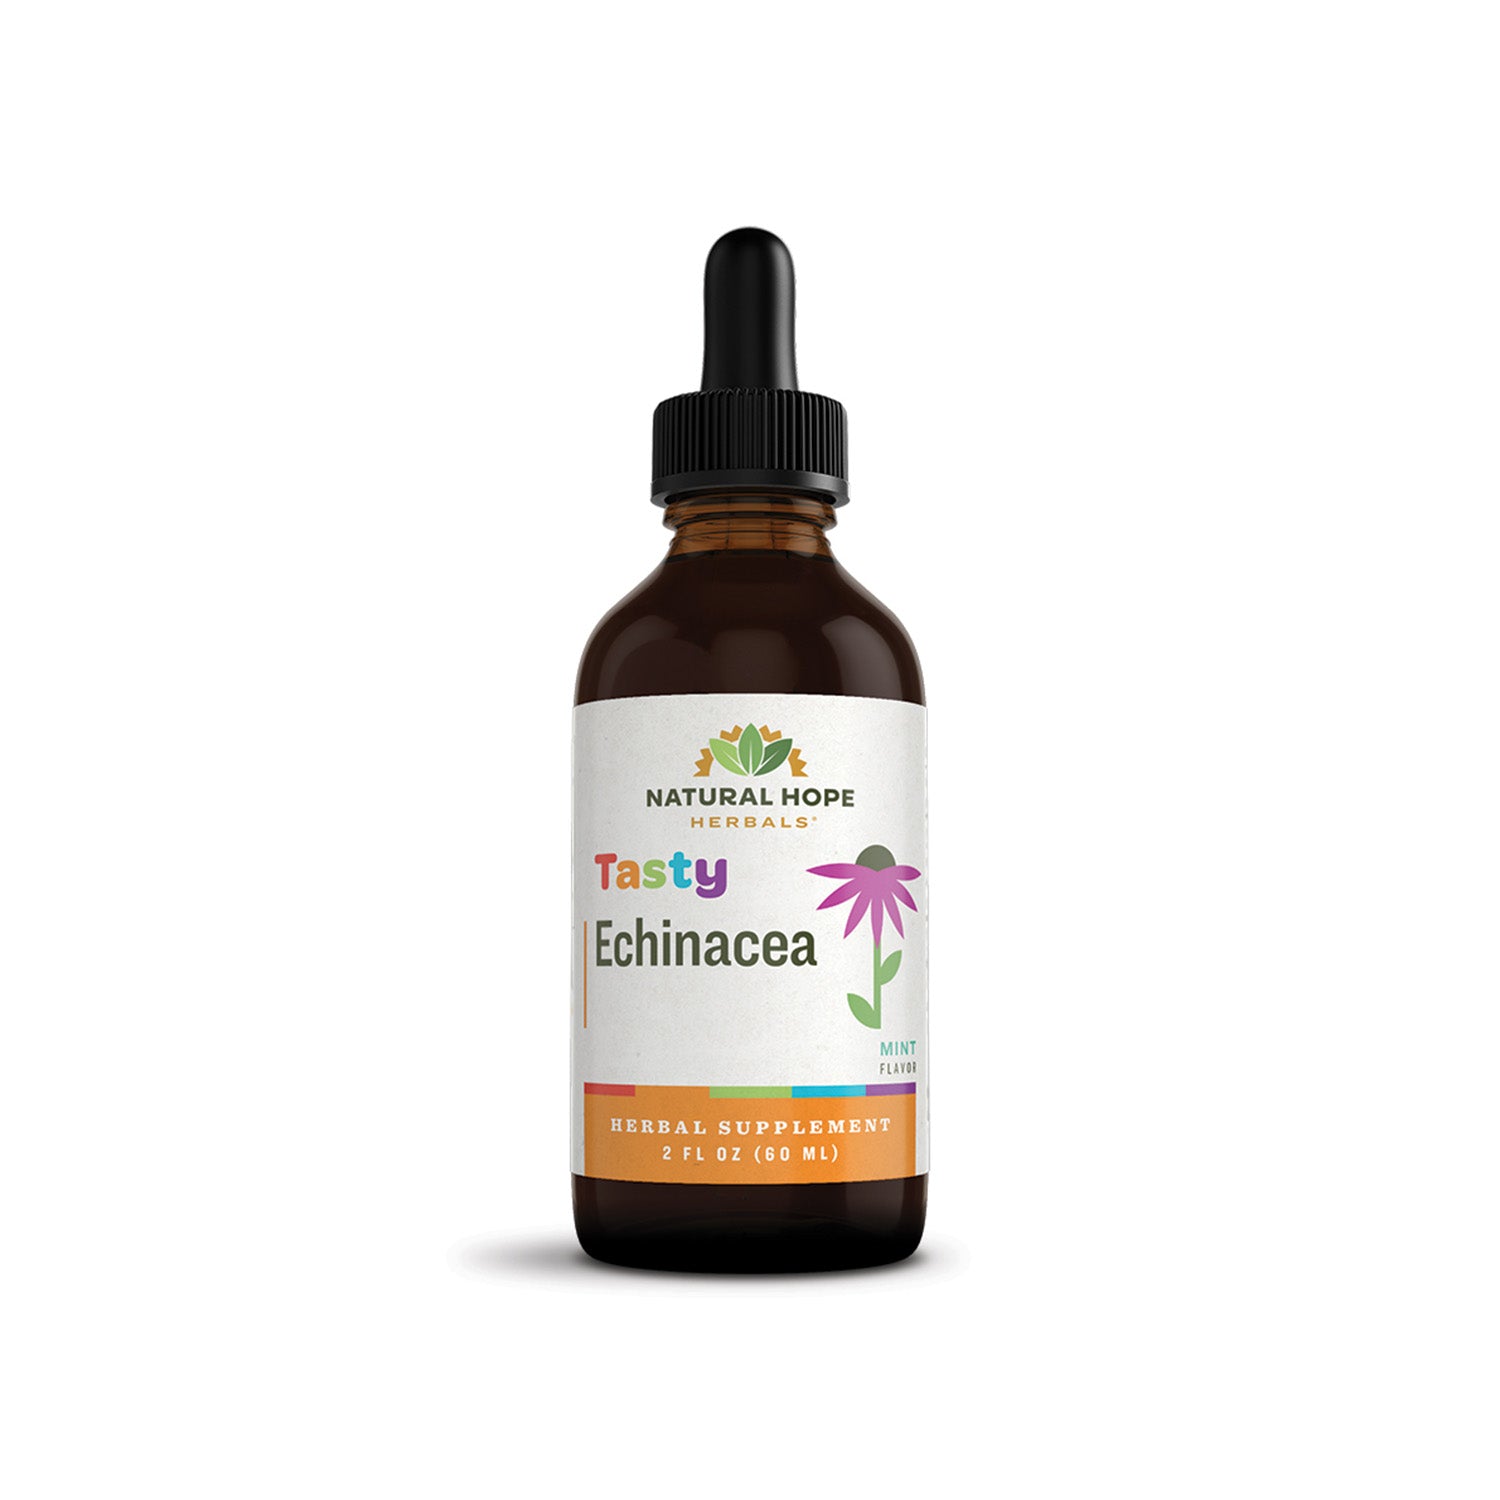 Tasty Echinacea - Natural Hope Herbals